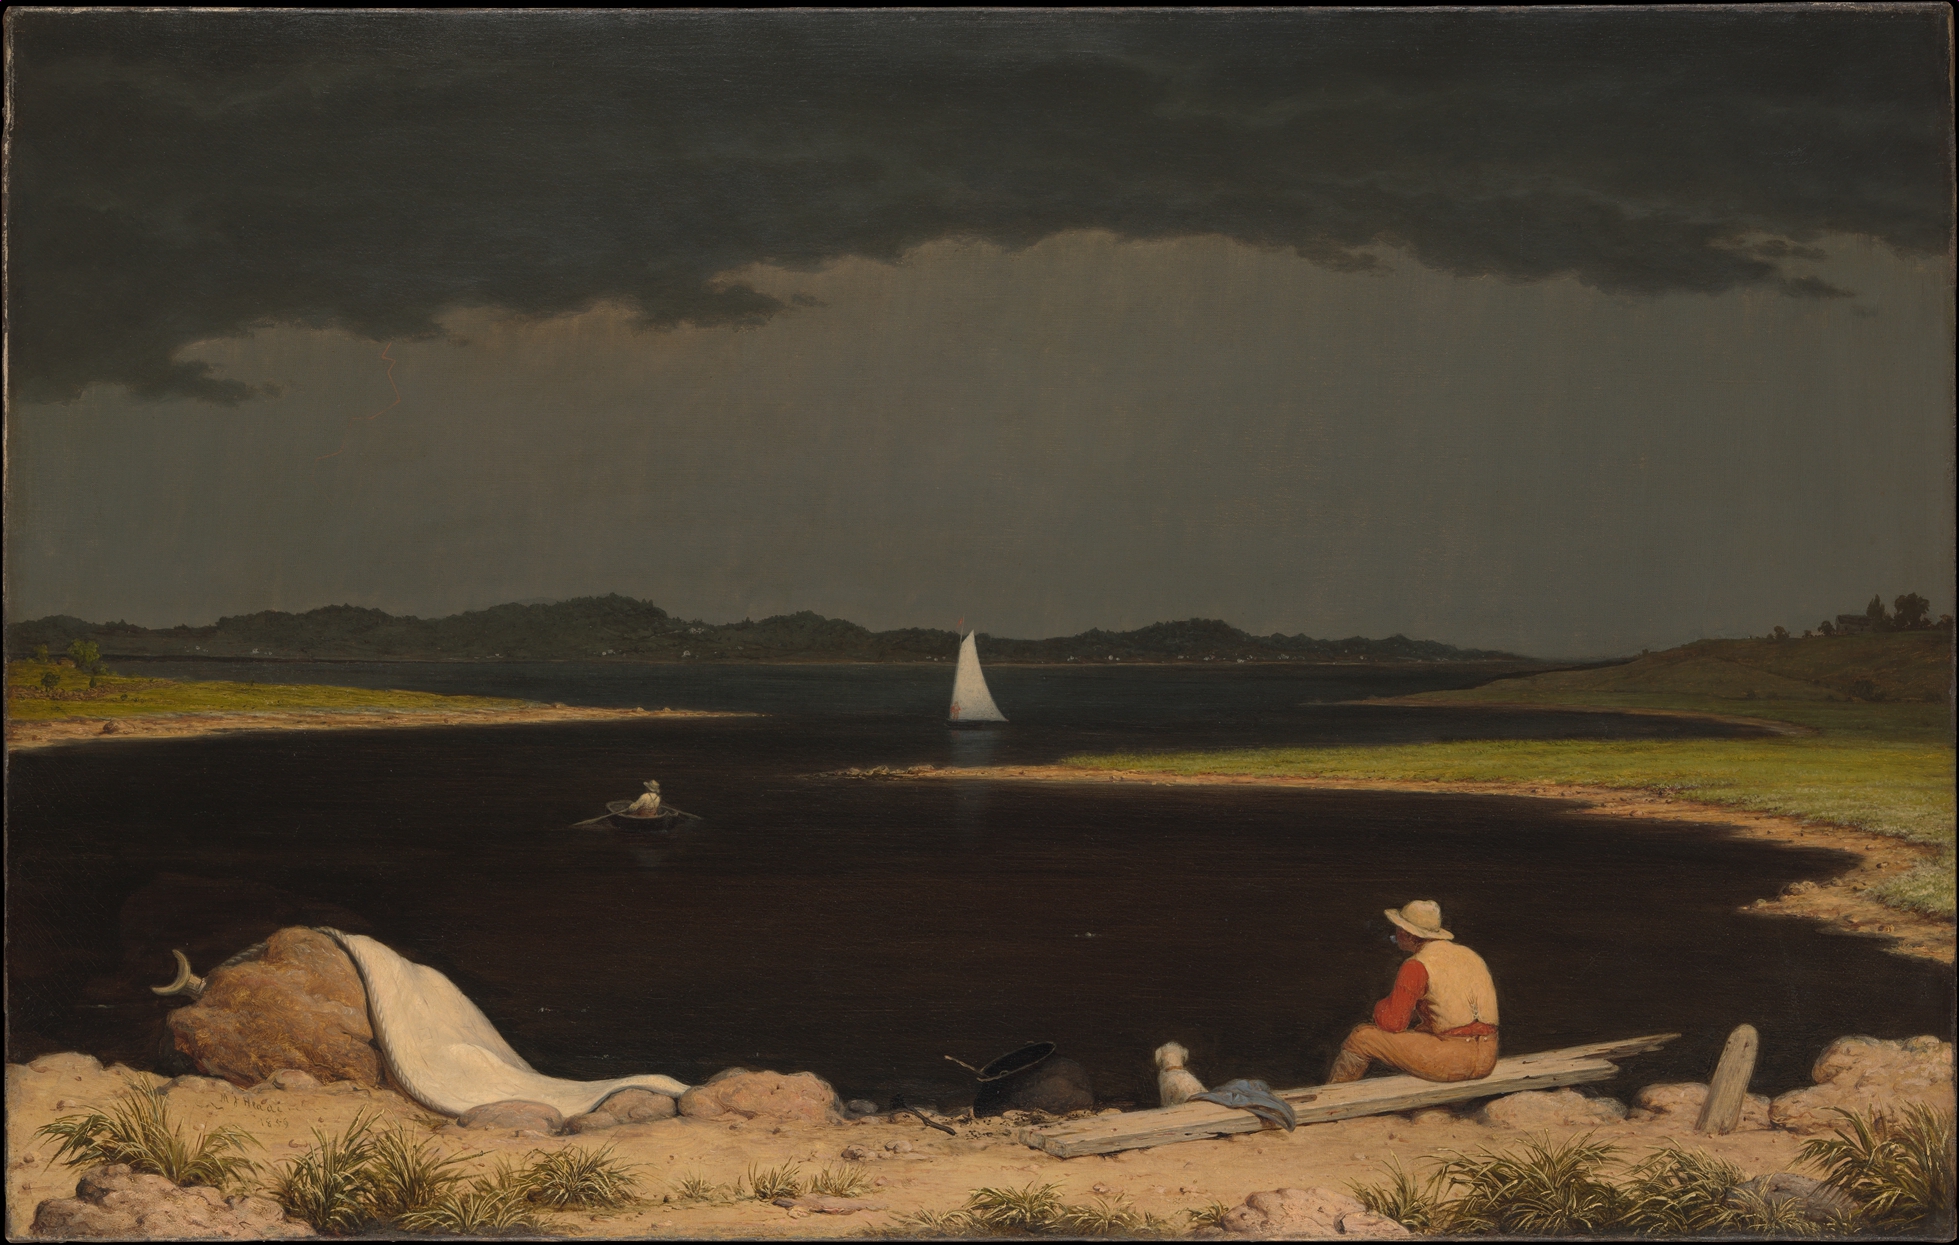 Acercándose a la tormenta by Martin Johnson Heade - 1859 - 71.1 x 111.8 cm Museo Metropolitano de Arte